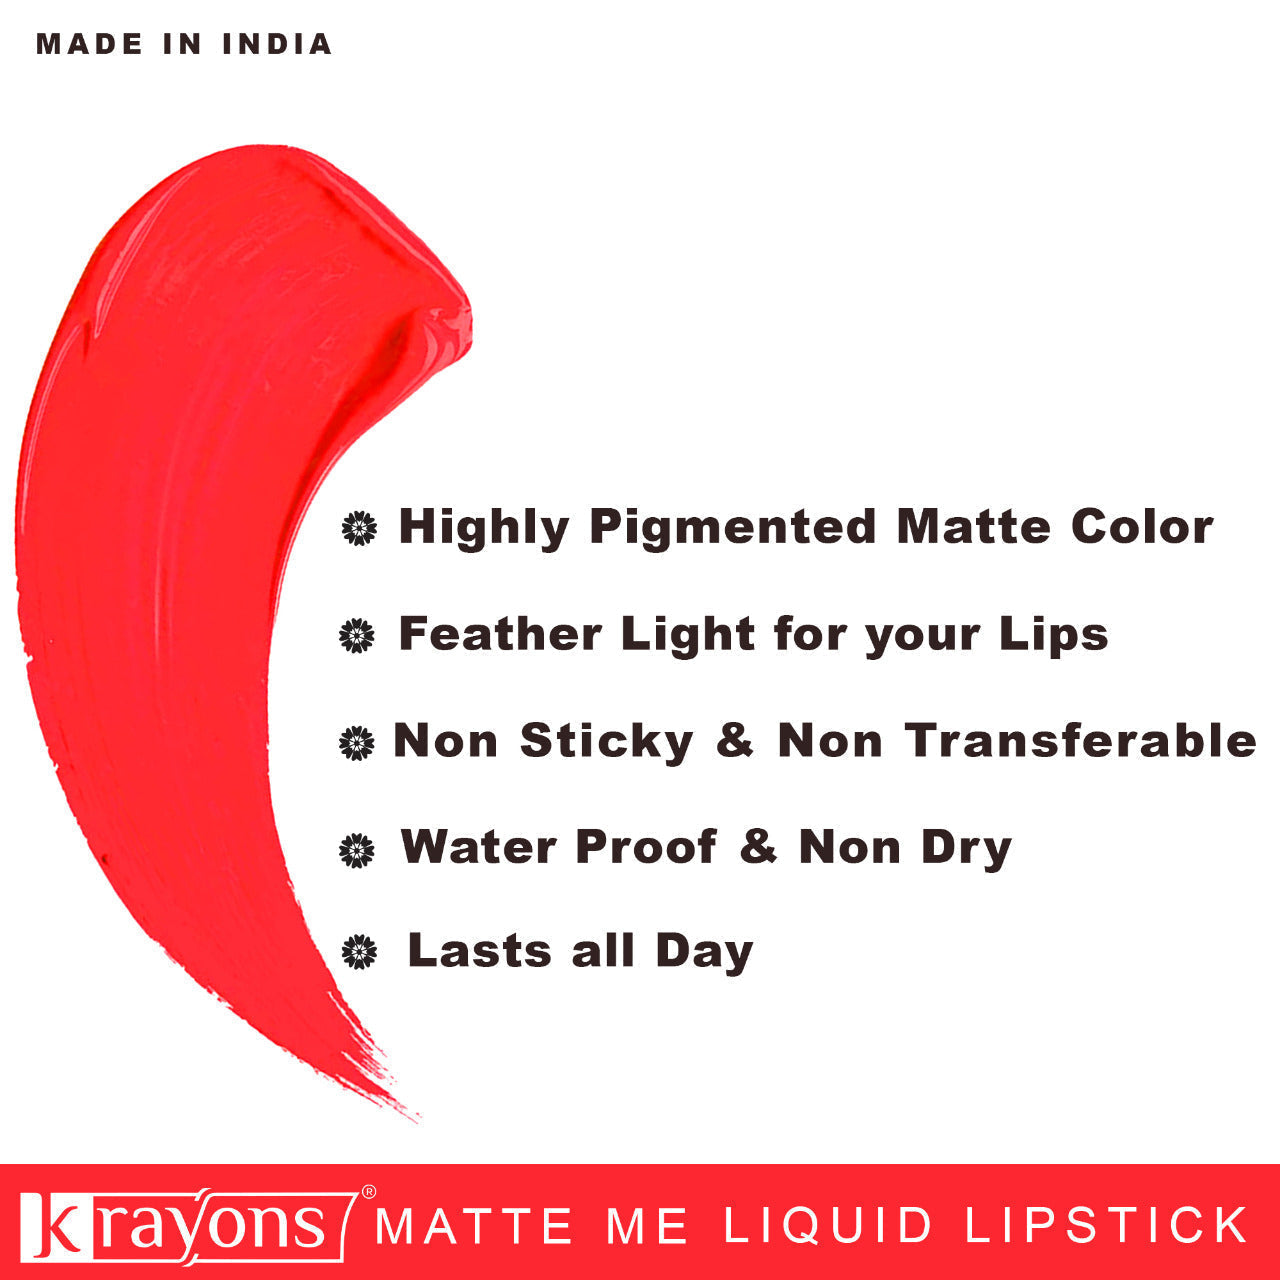 Krayons Matte Me Ultra Smooth Matte Liquid Lip Color, Mask Proof, Waterproof, Longlasting, 5ml Each, Combo, Pack of 2 (Sunset Orange, Nude Embrace)